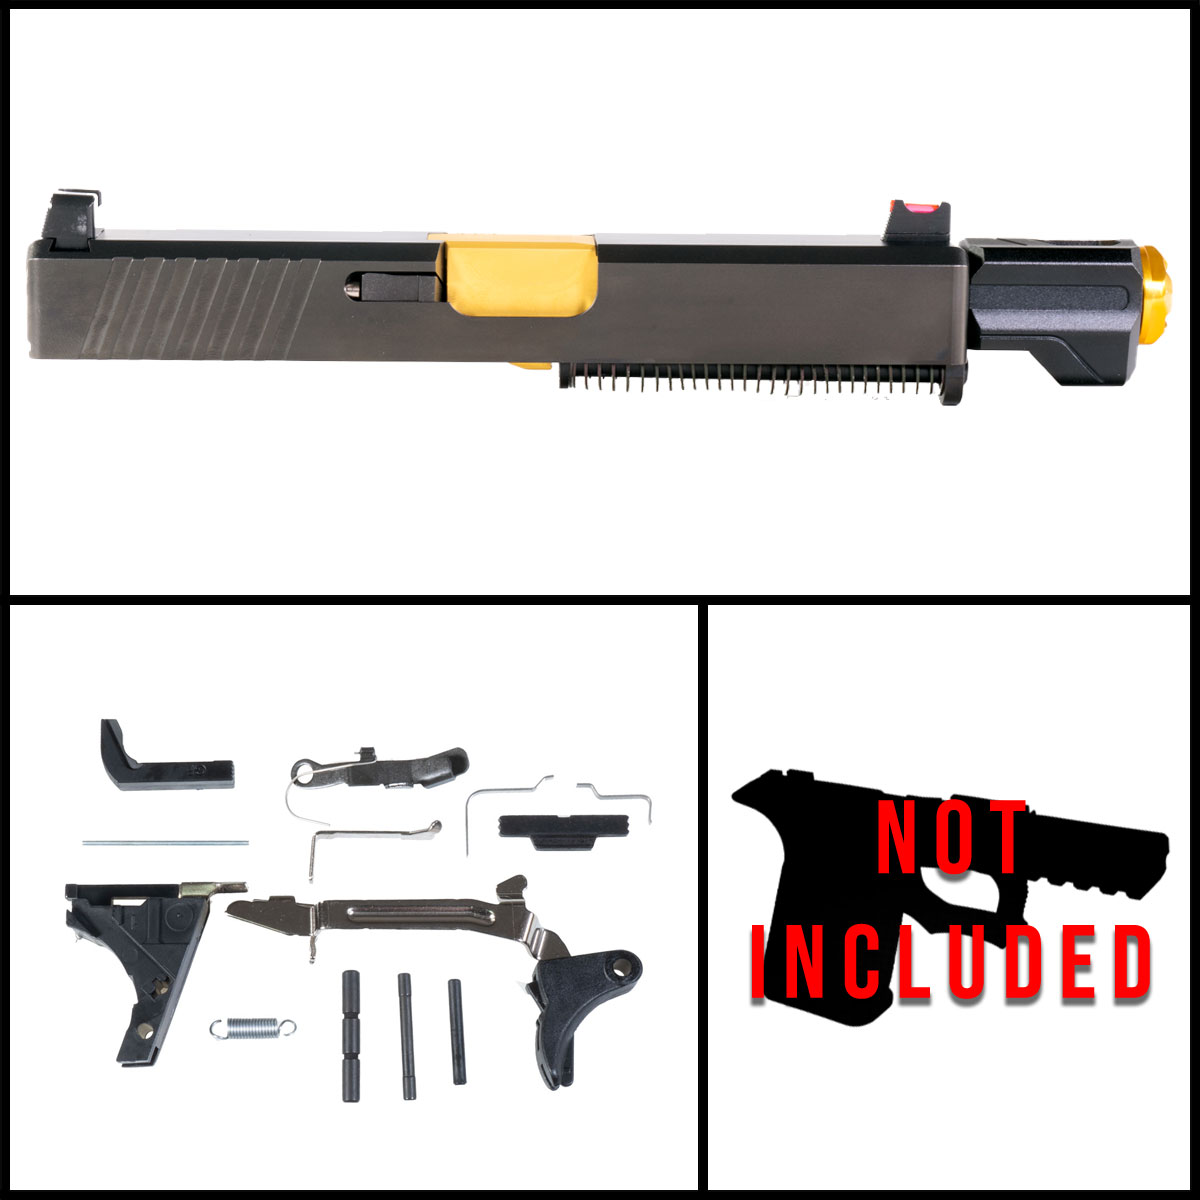 MMC 'Geschoss w/ Tyrant Designs Compensator' 9mm Full Pistol Build Kit (Everything Minus Frame) - Glock 19 Gen 1-3 Compatible